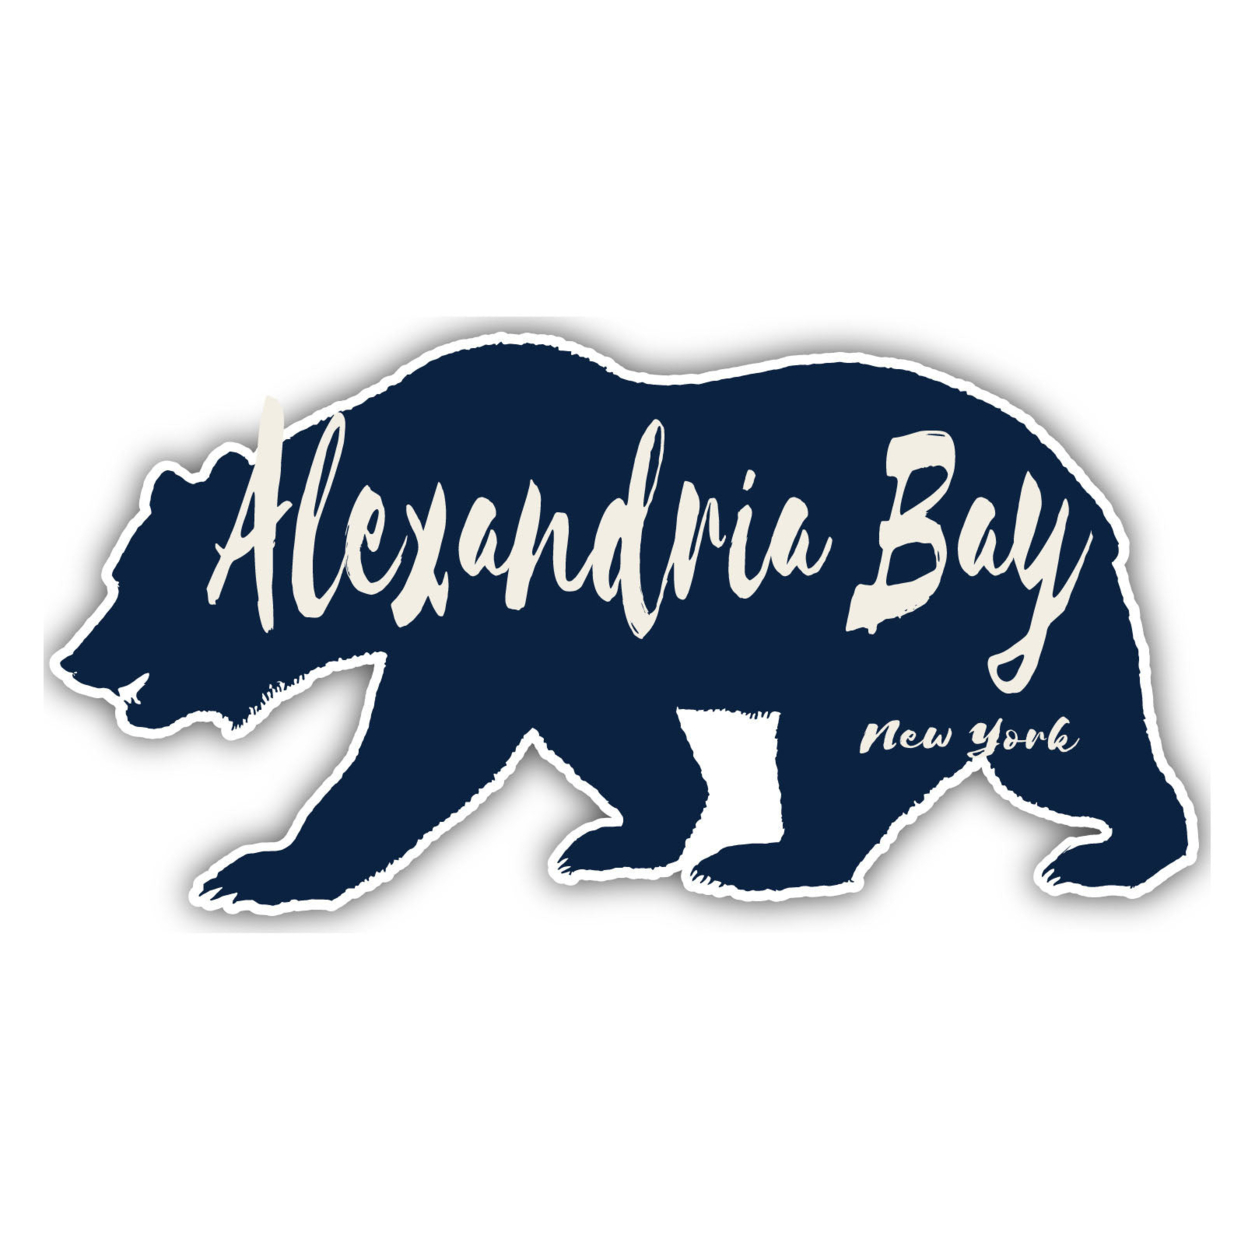 Alexandria Bay New York Souvenir Decorative Stickers (Choose Theme And Size) - Single Unit, 2-Inch, Adventures Awaits